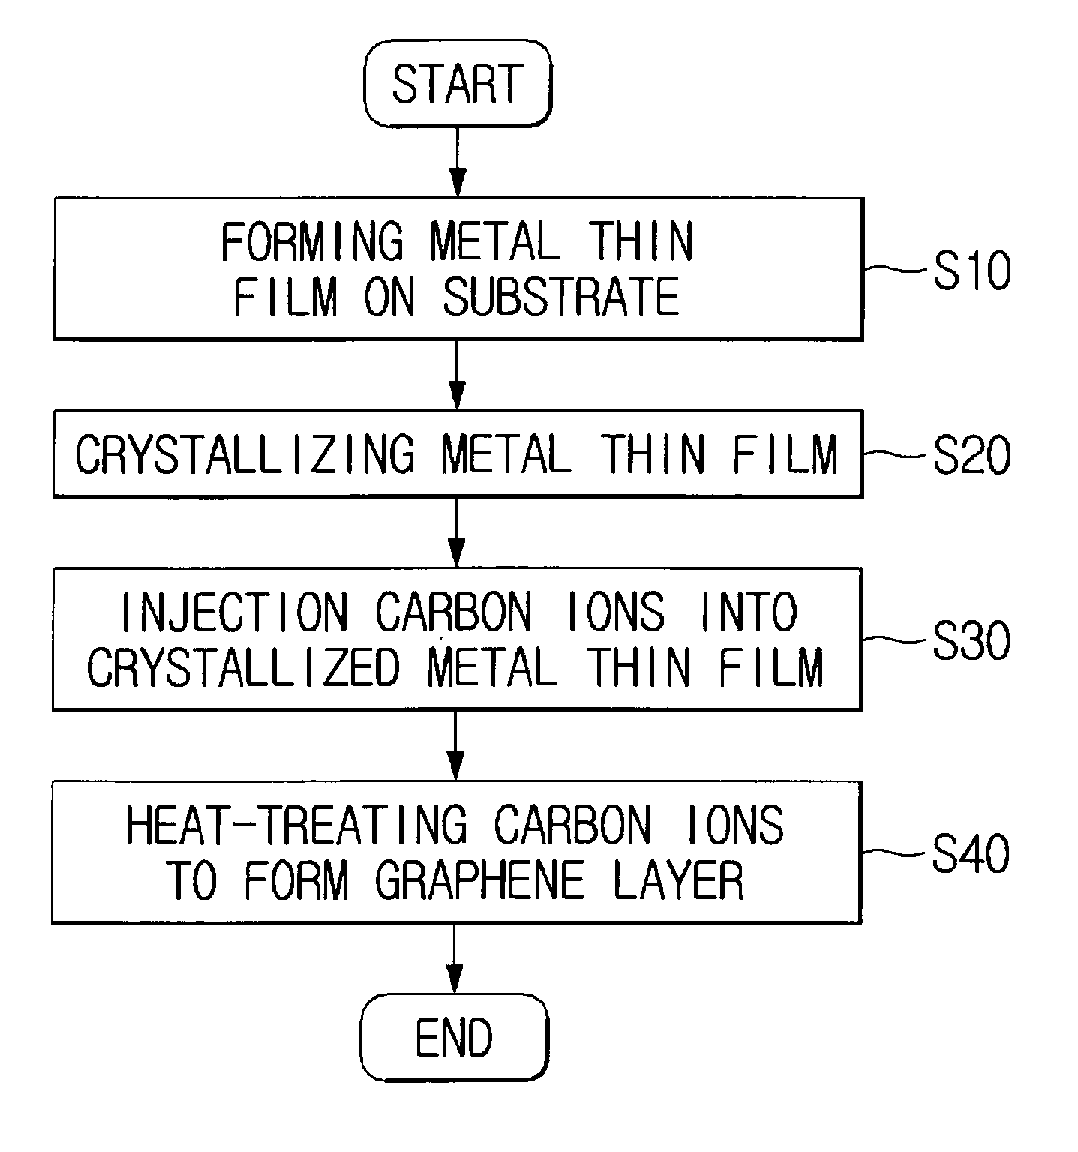 Method of forming graphene layer